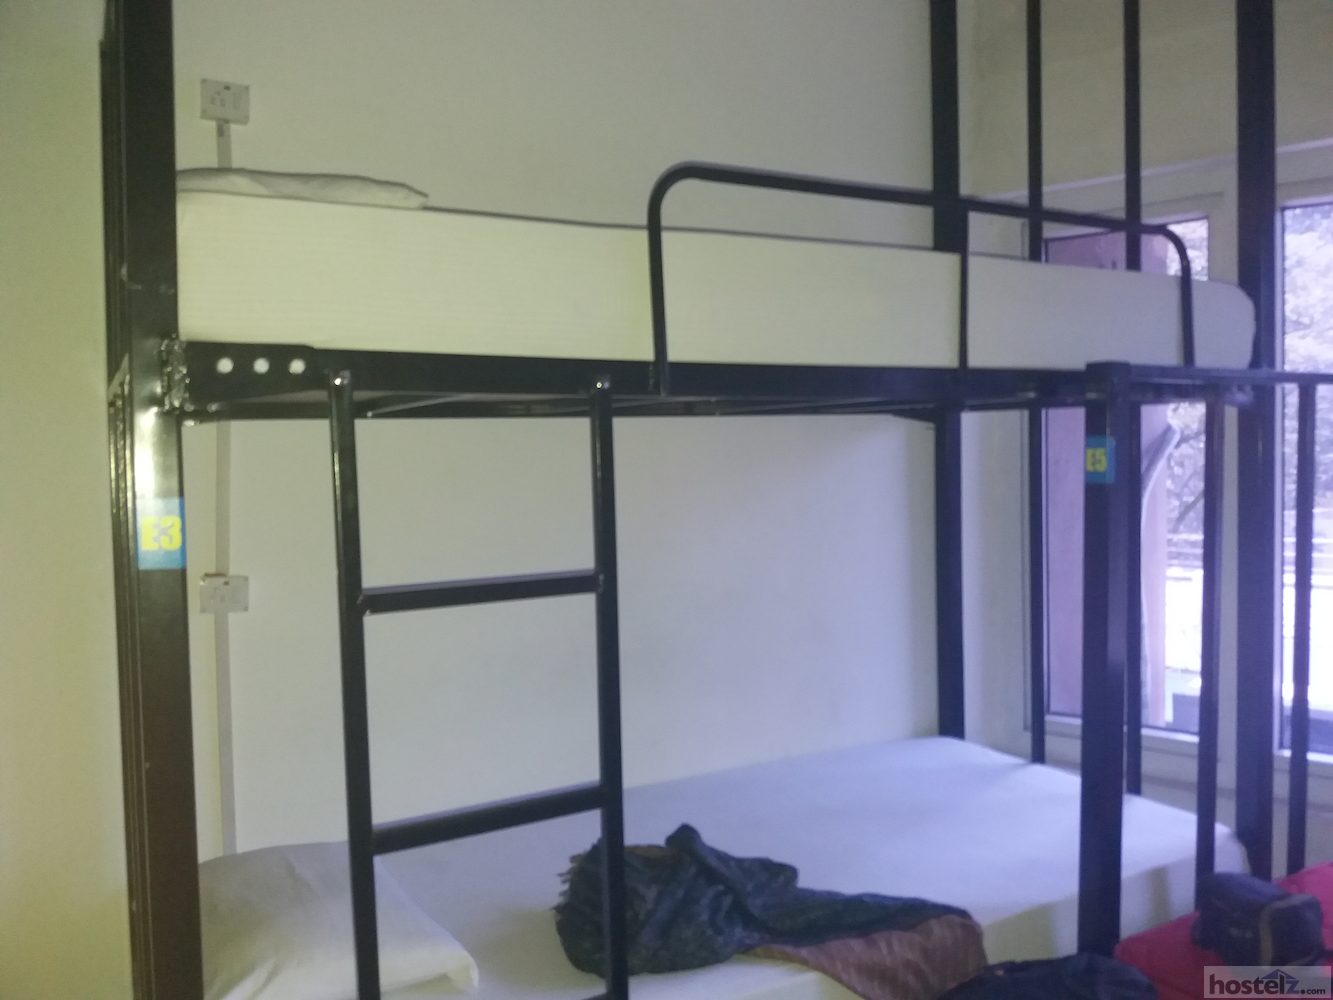 the cheaper bunks